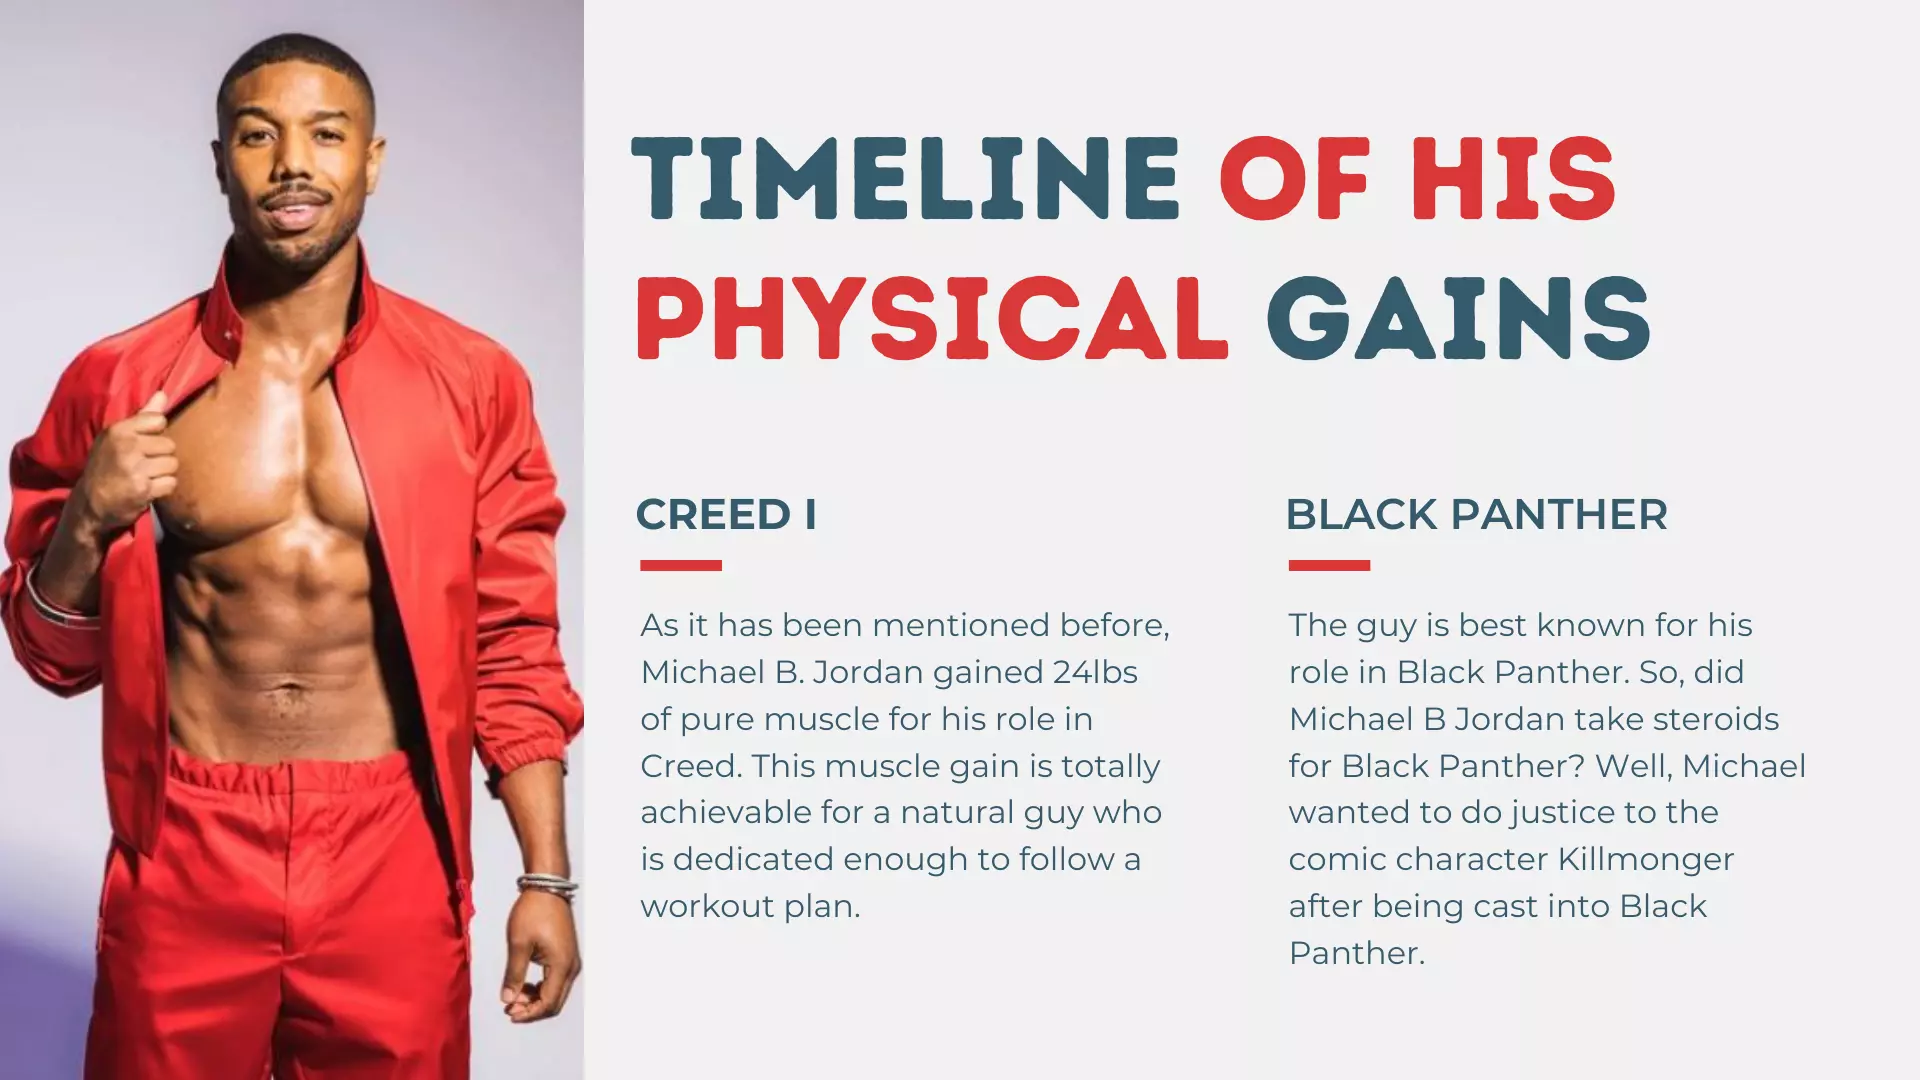 Did Michael B Jordan Take Steroids for Black Panther